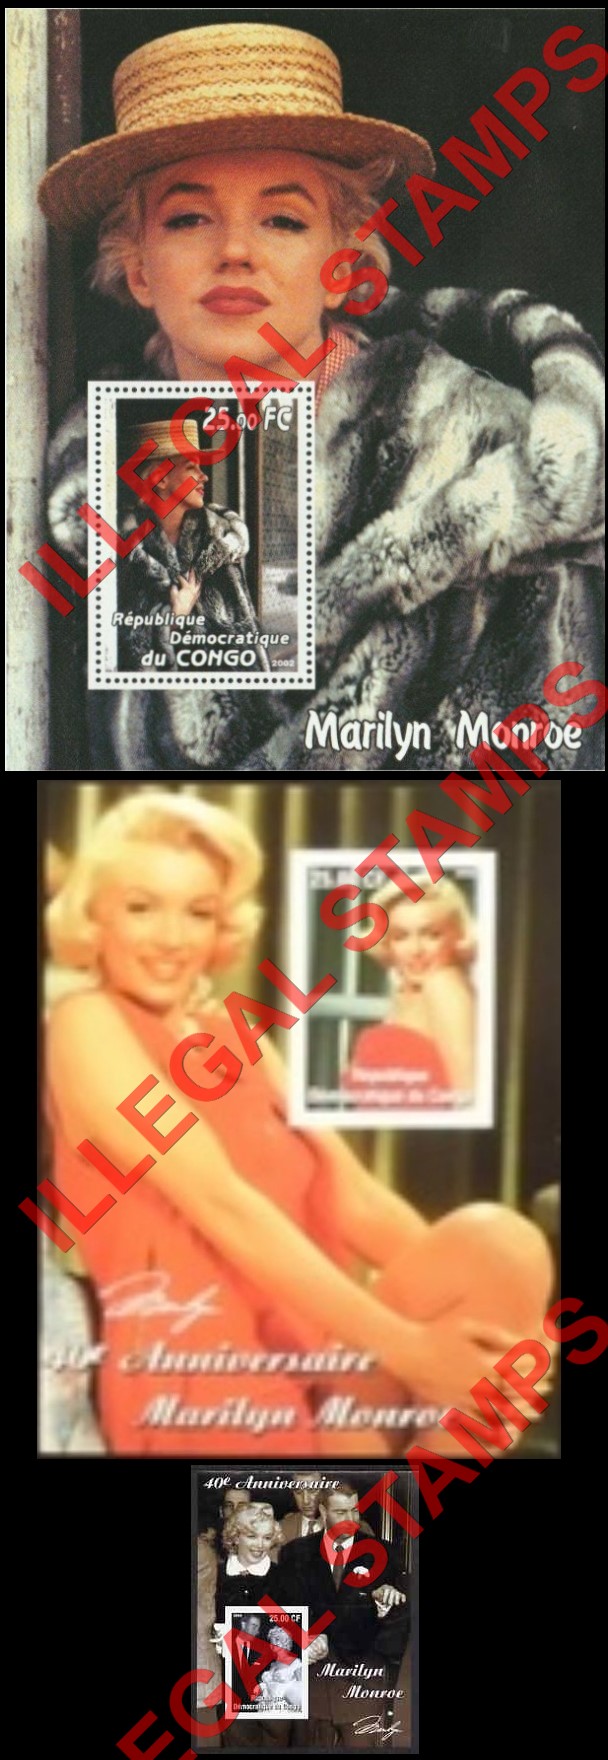 Congo Democratic Republic 2002 Marilyn Monroe Illegal Stamp Souvenir Sheets of 1 (Part 2)